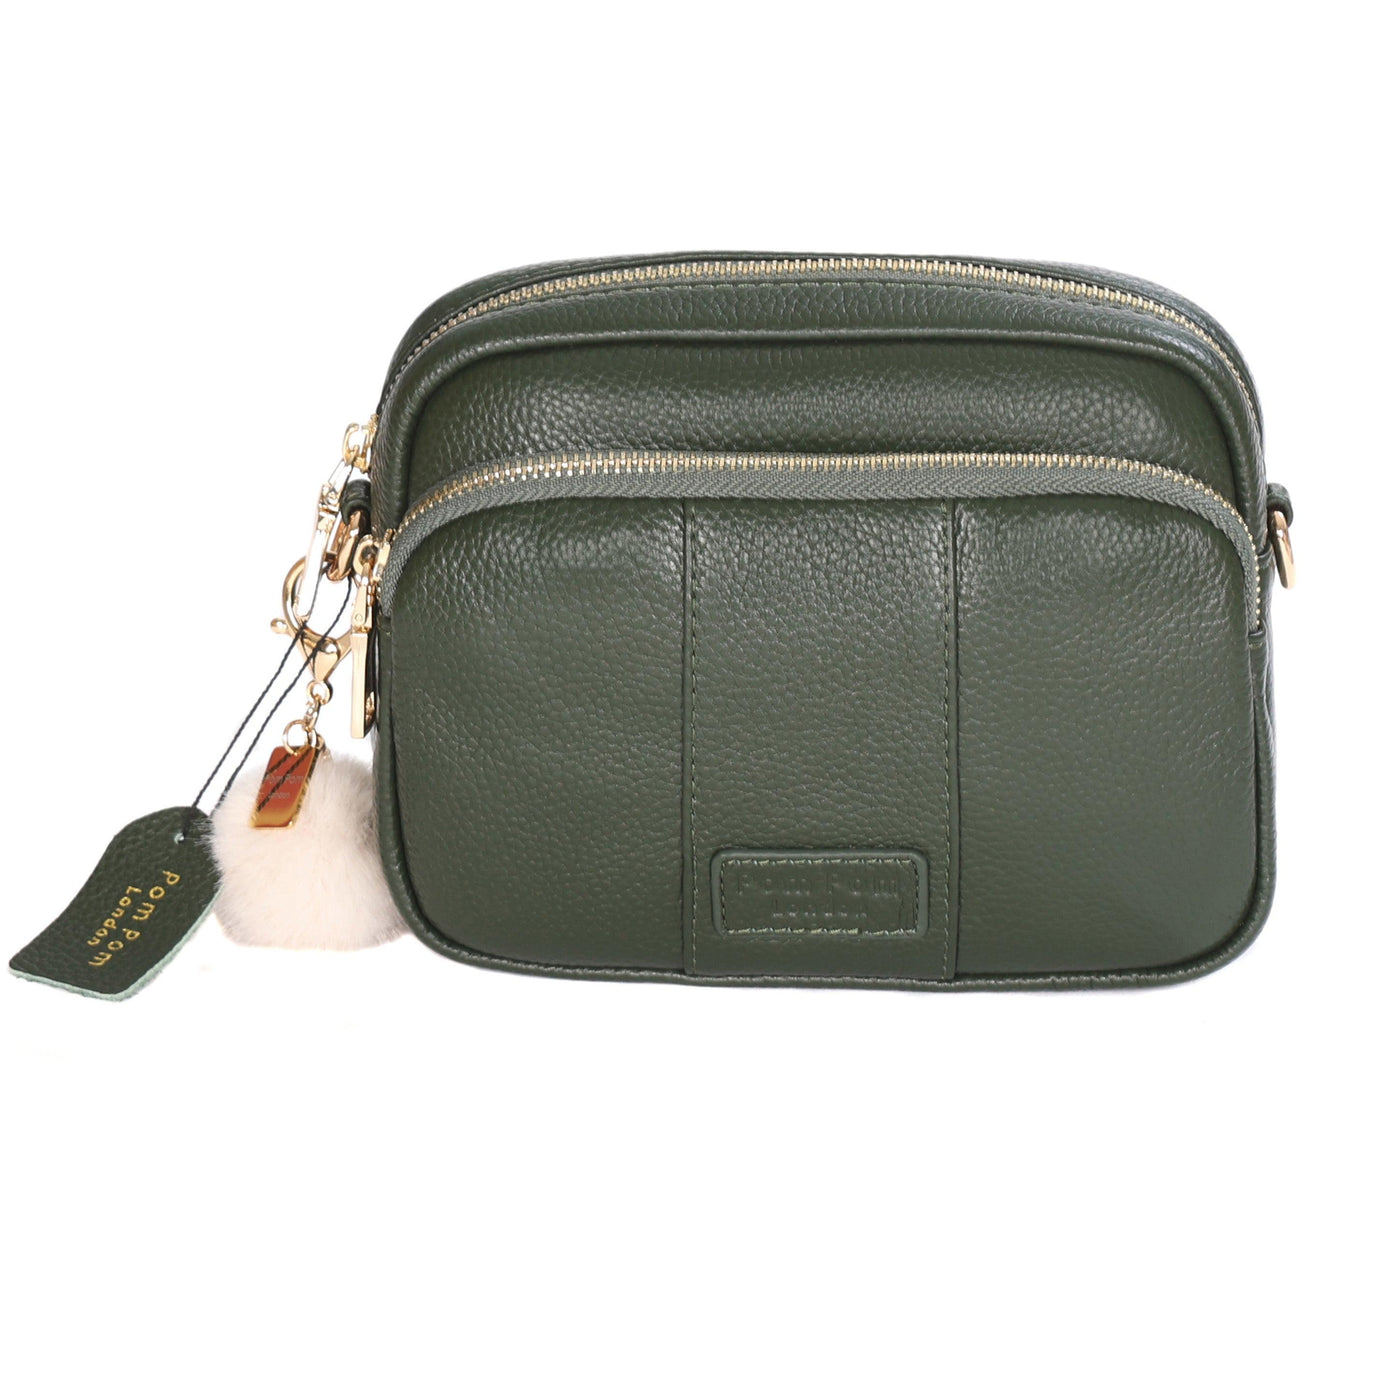 Mayfair Bag Vintage Green & Accessories - Pom Pom London